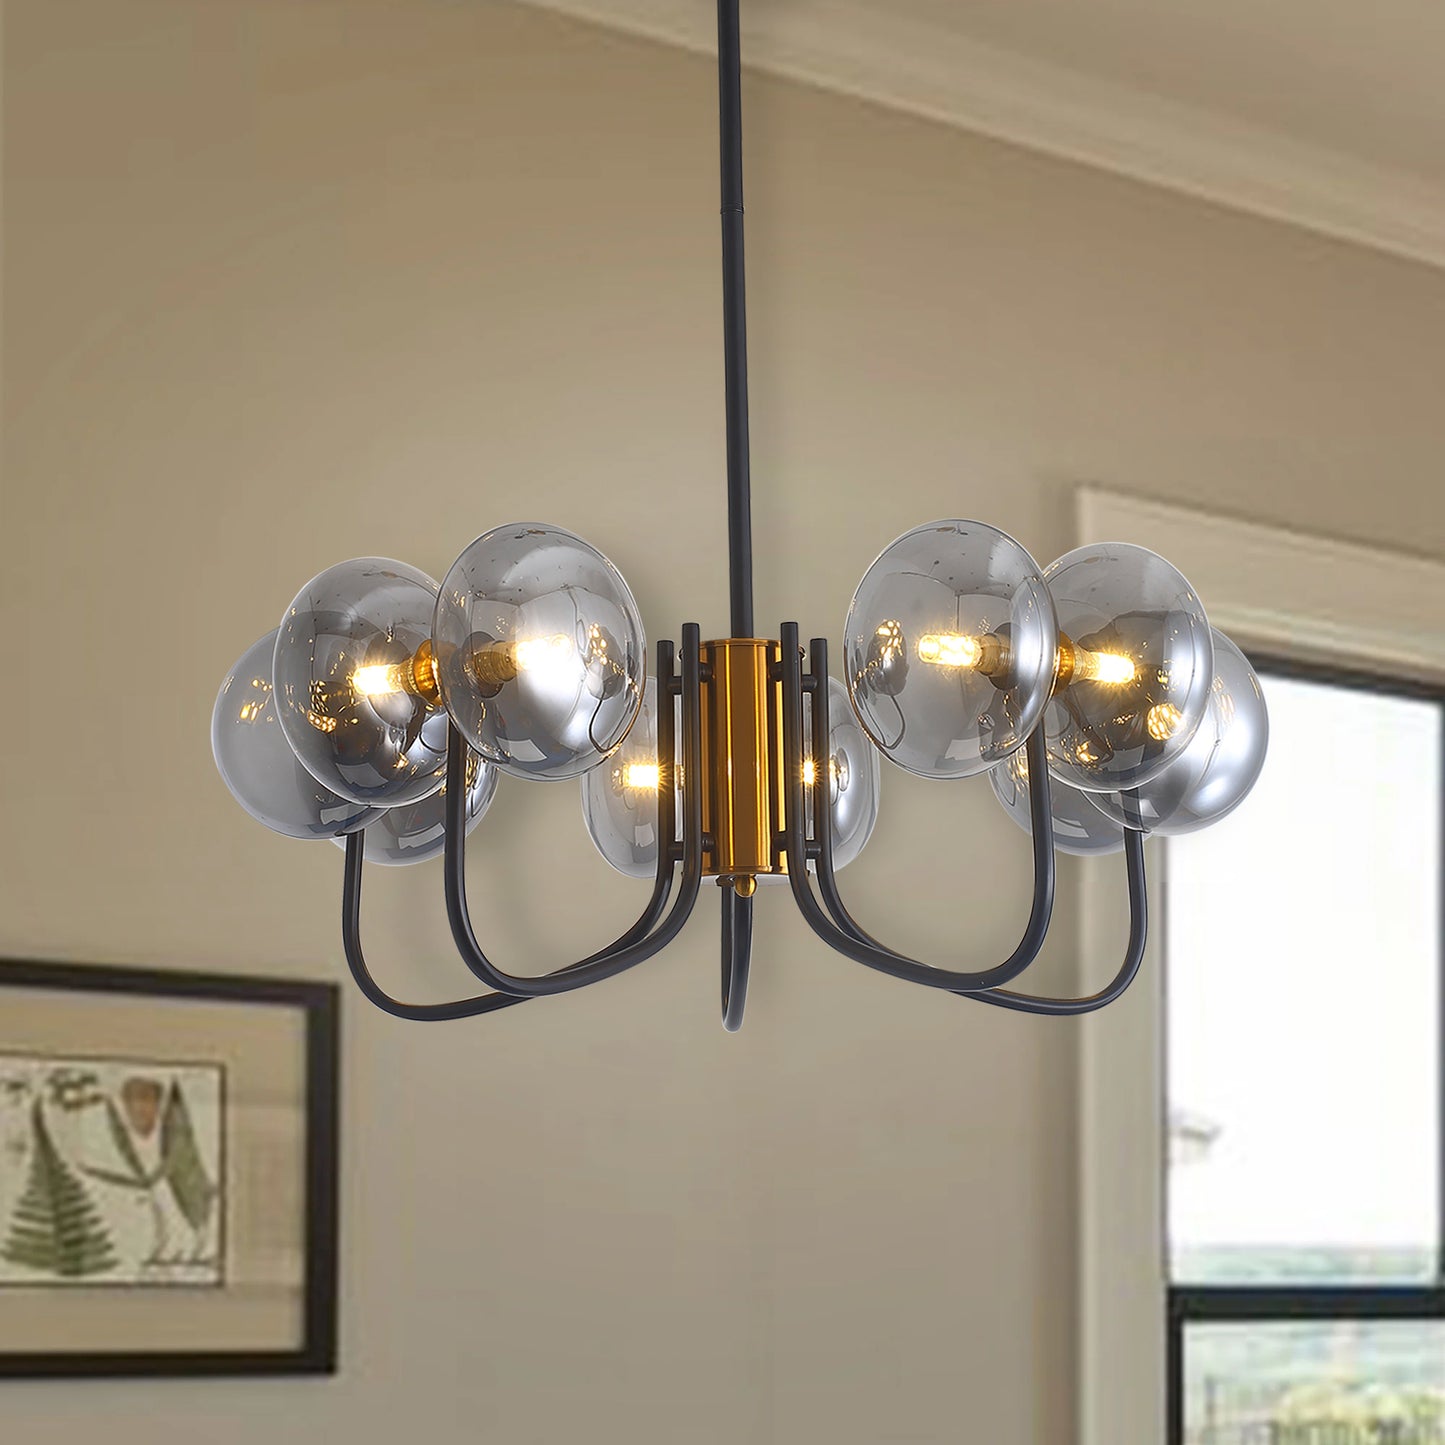 Modern American chandelier-black gold iron glass lampshade -10 bulbs -G9 lamp holder